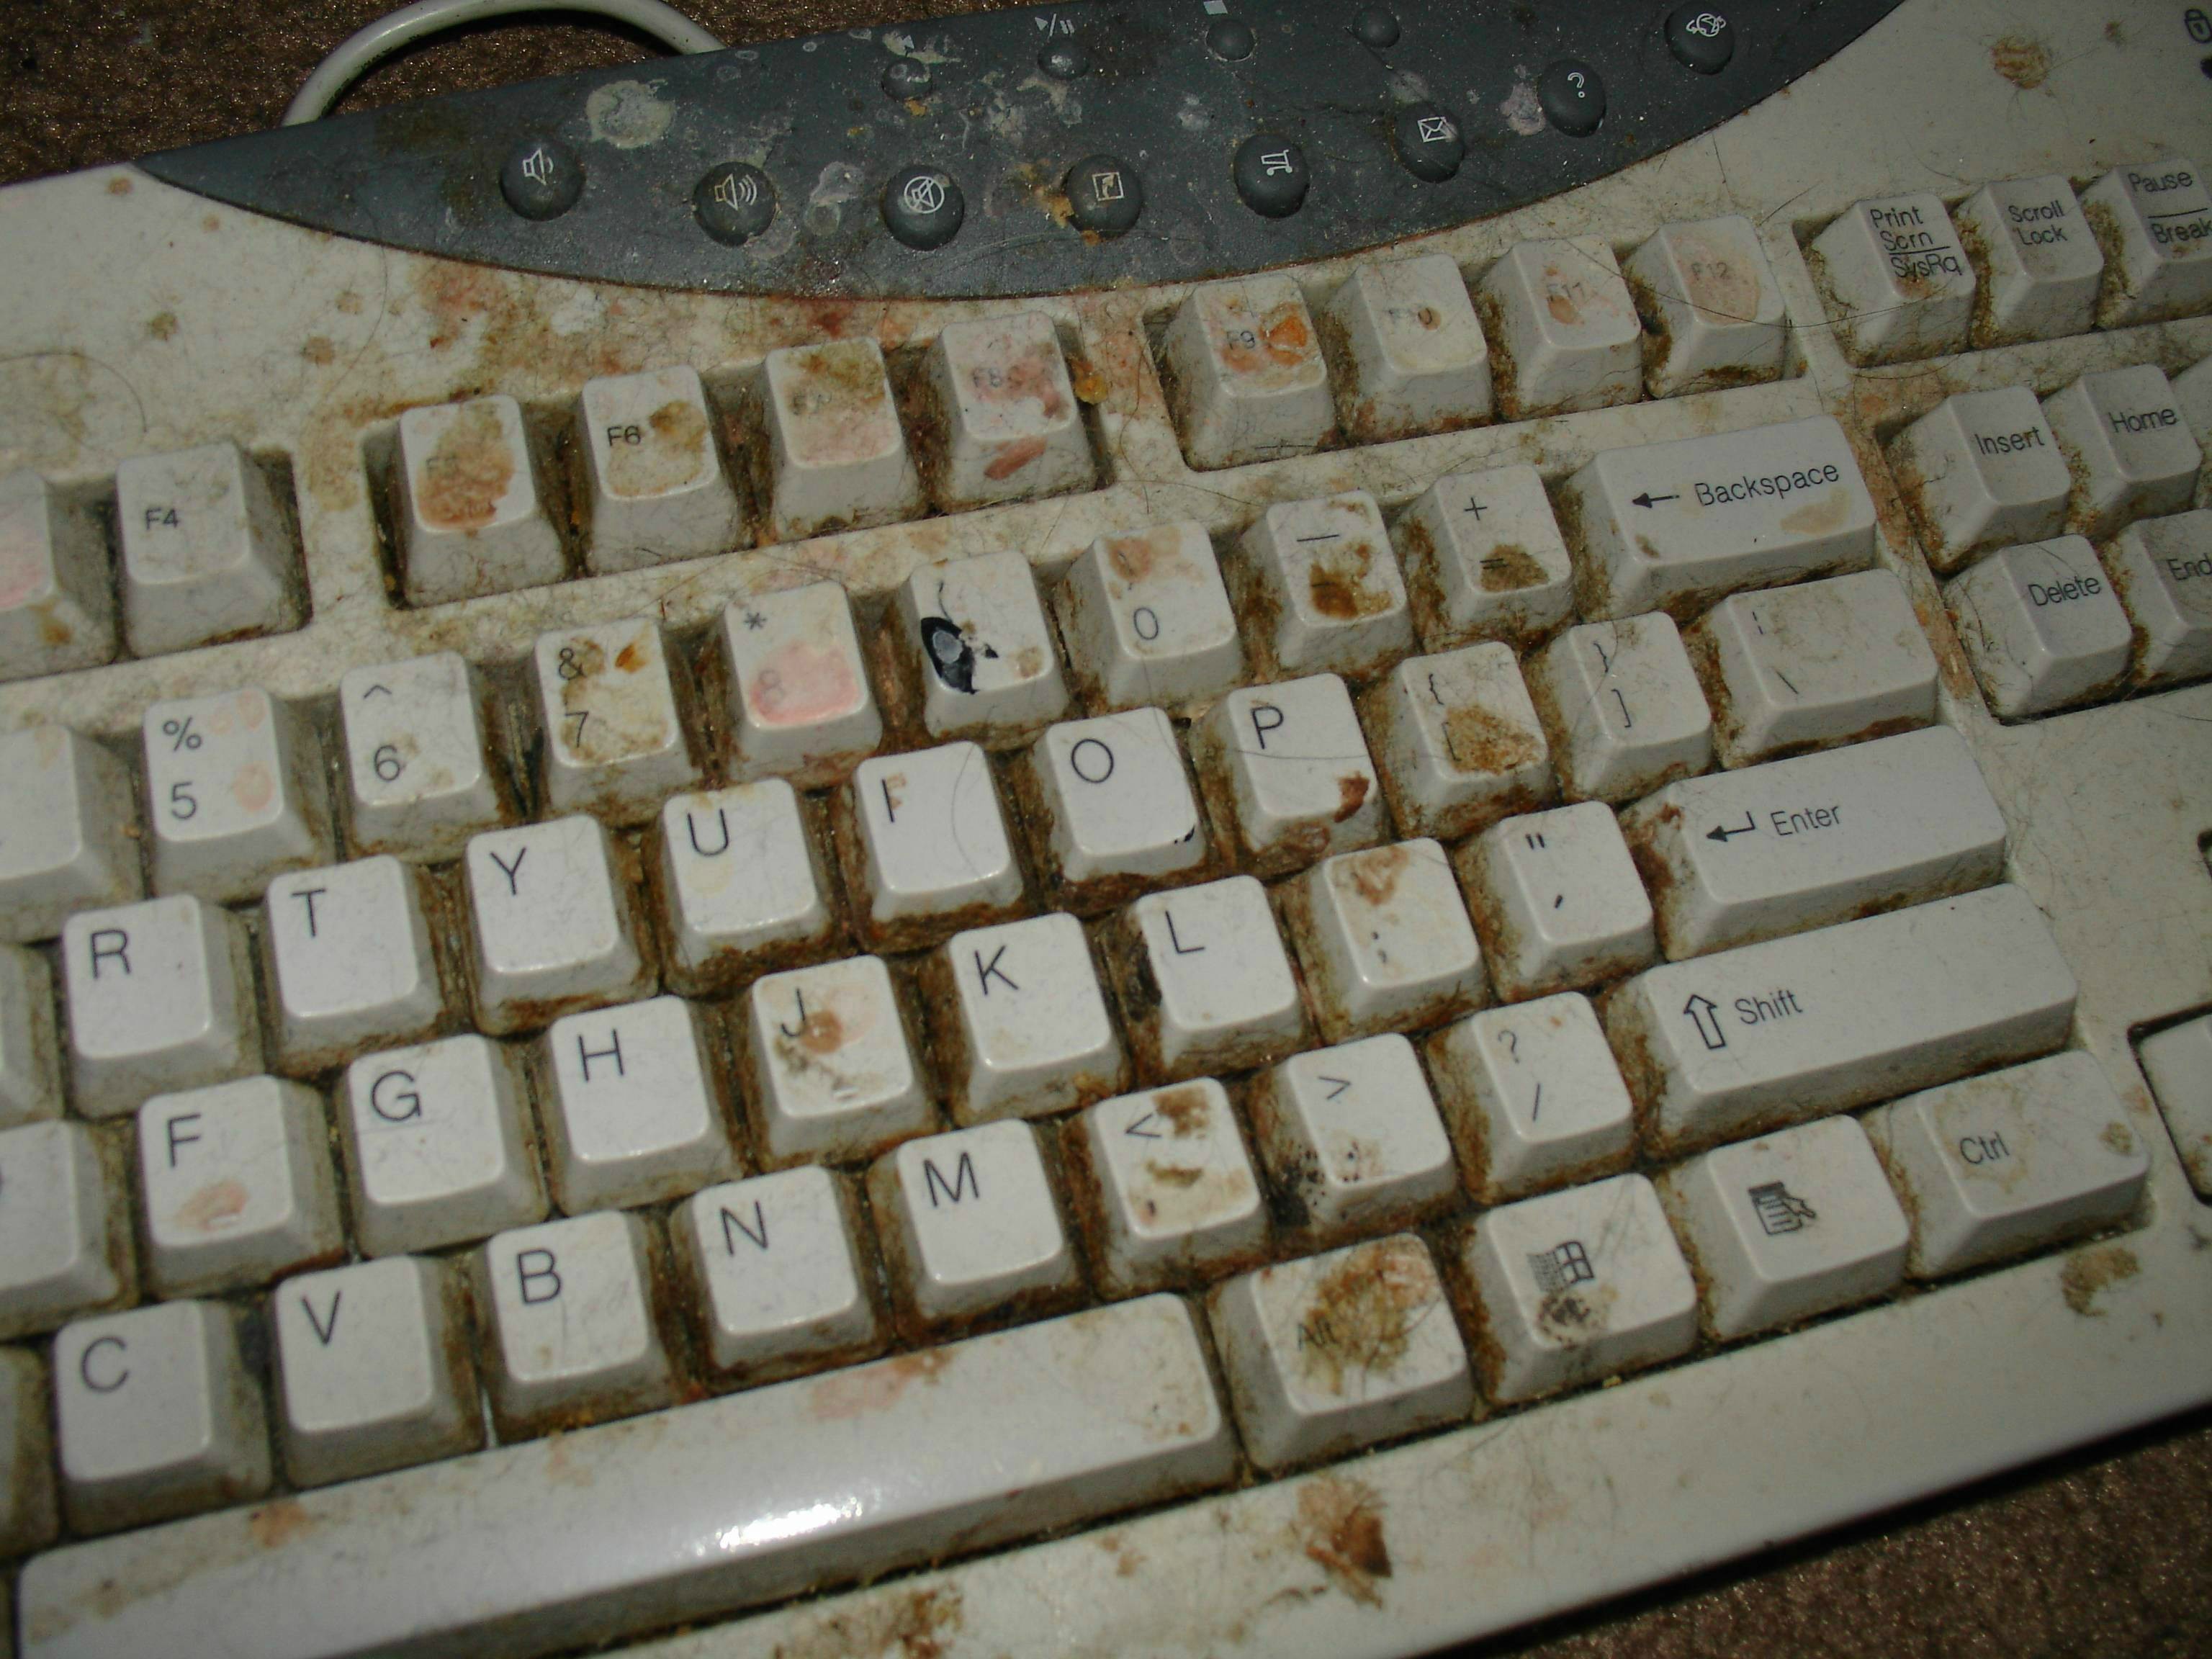 sad and disgusting gamer rigs - crusty keyboard - F Home De % o 5 F U Y T R Il K. H G F Cm M Bn V